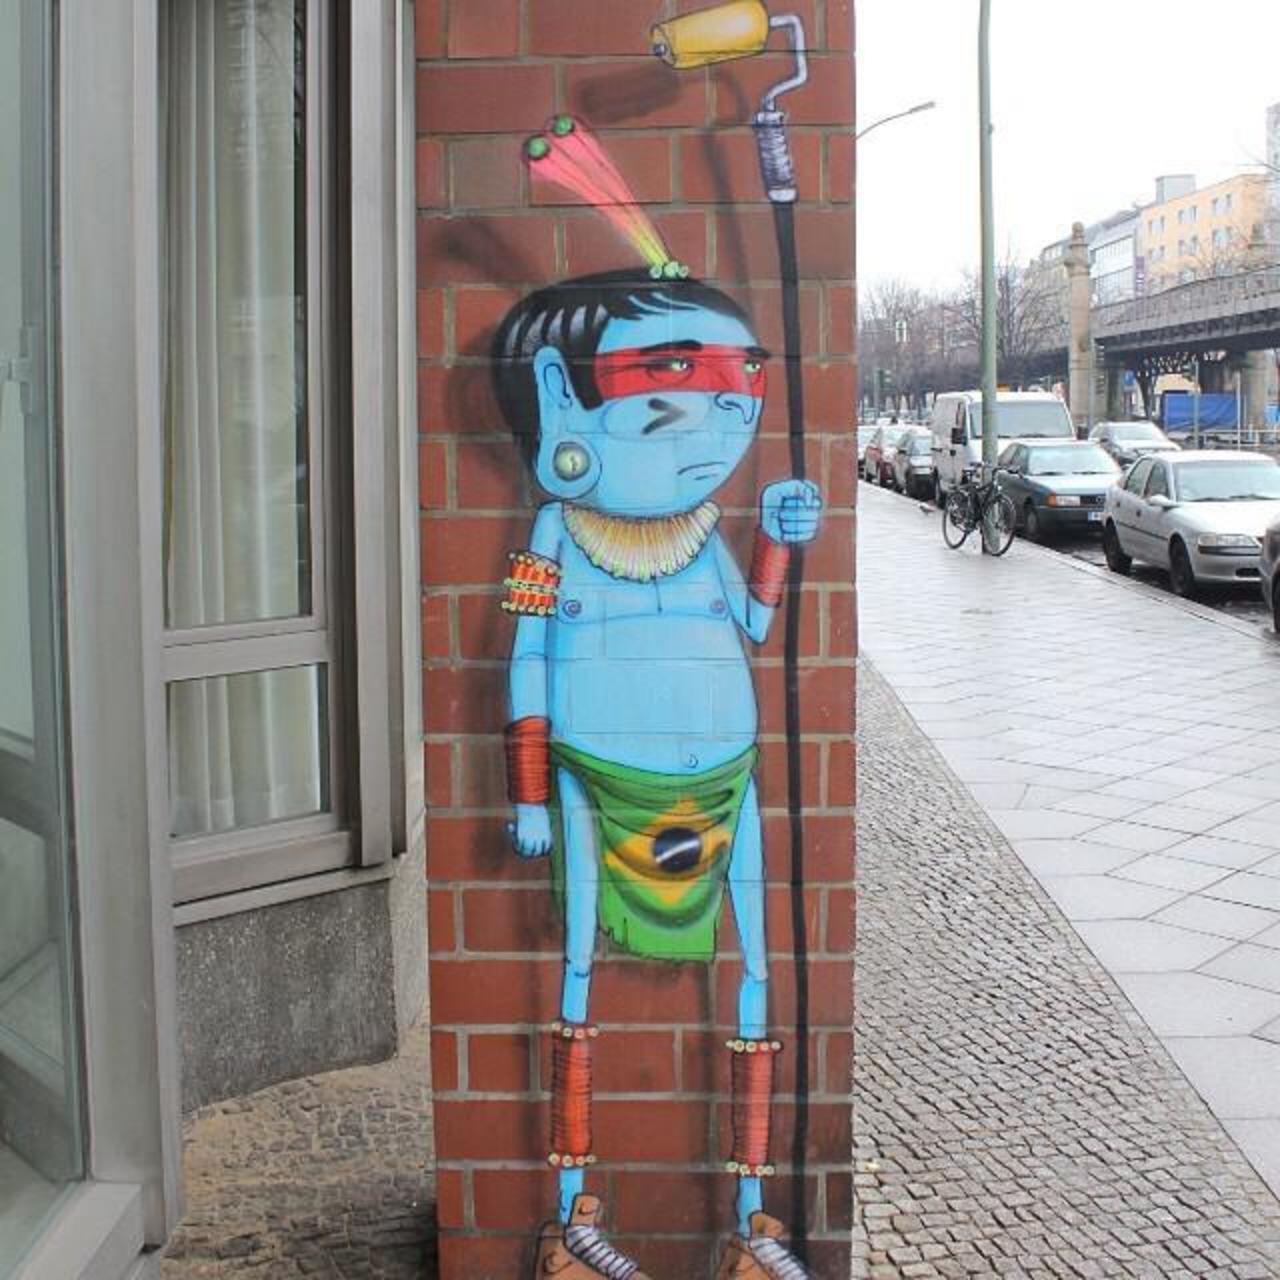 #Berlin #Allemagne #streetart #street #art #urbanart #urbantag #graffiti #streetartberlin by becombegeek http://t.co/c1Ql35PQxF